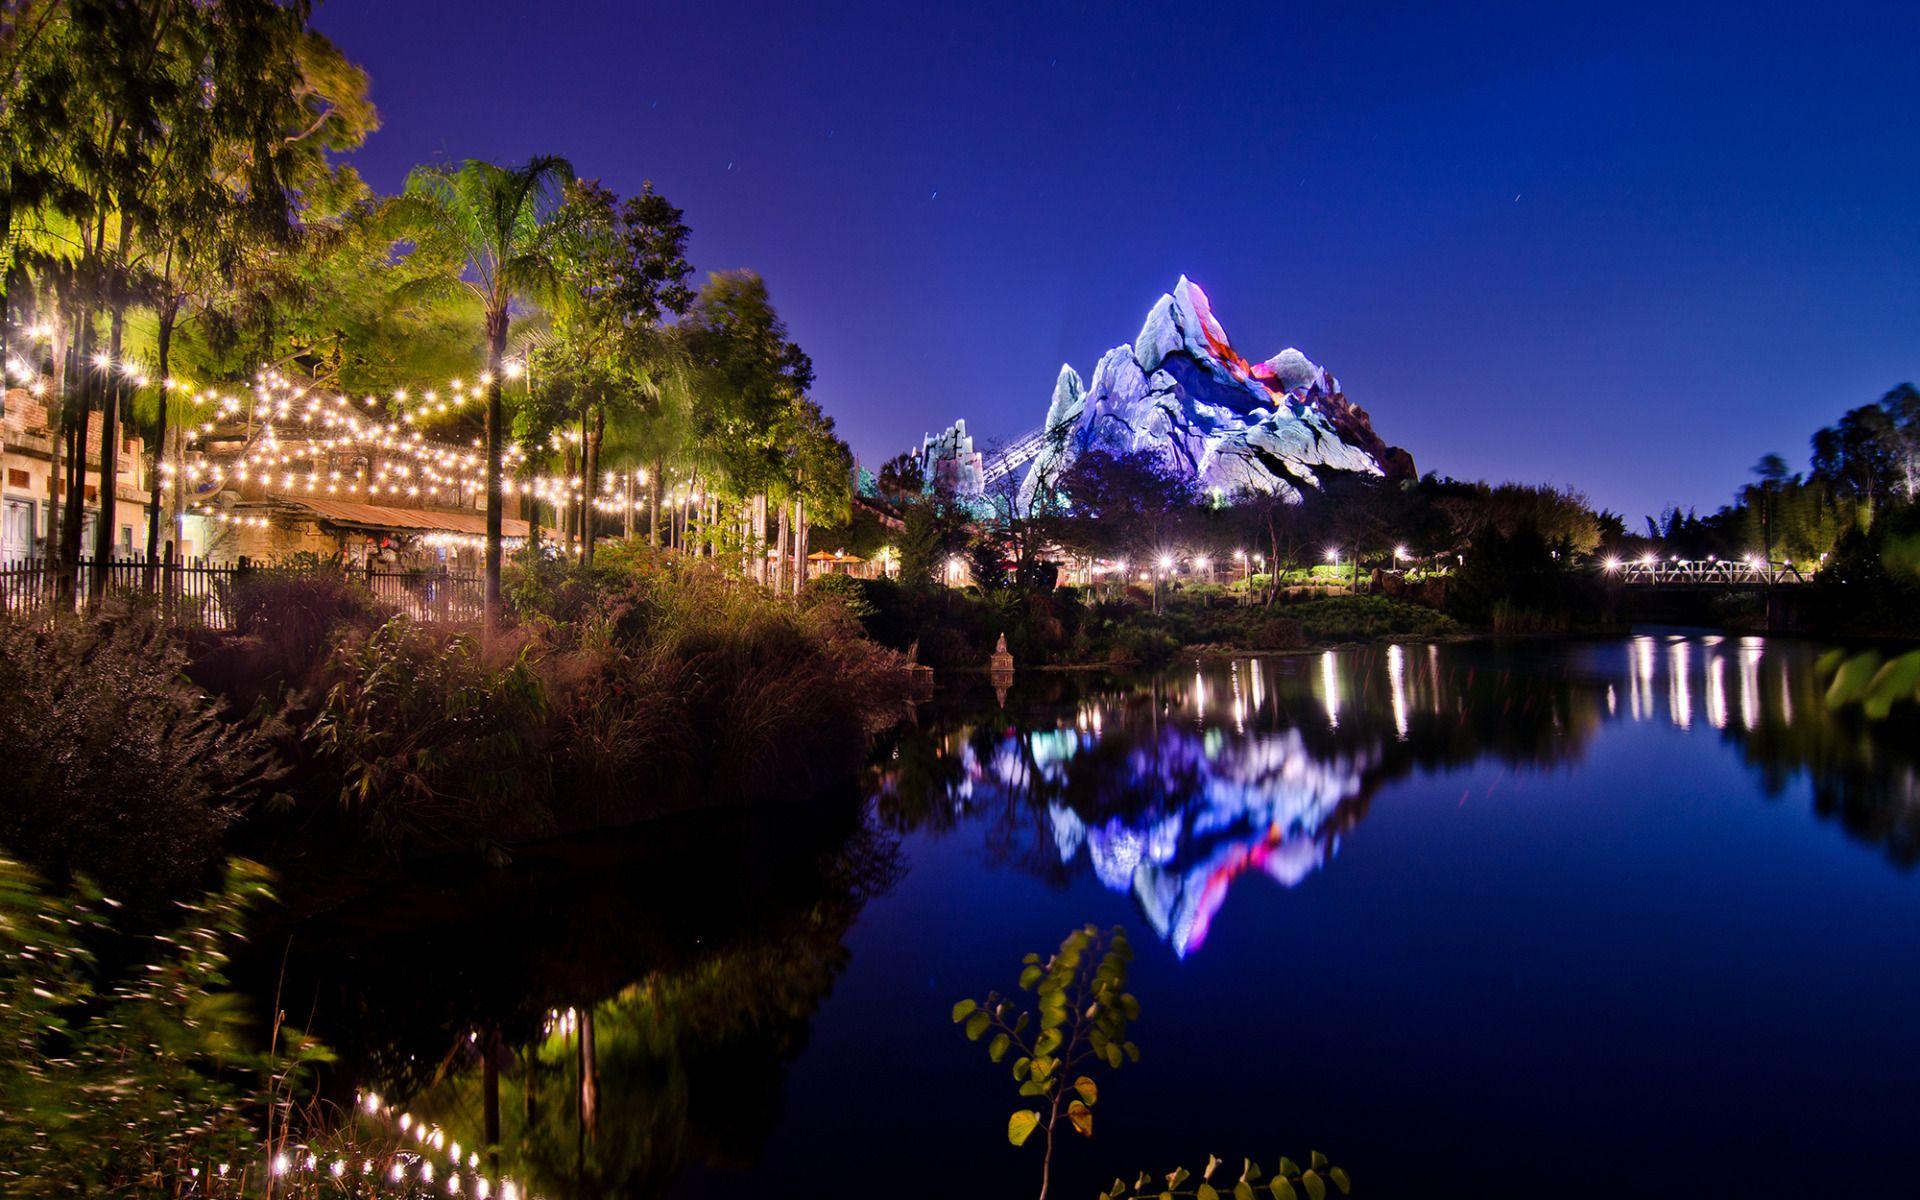 Disney's Animal Kingdom, Walt Disney World, Asia at Night